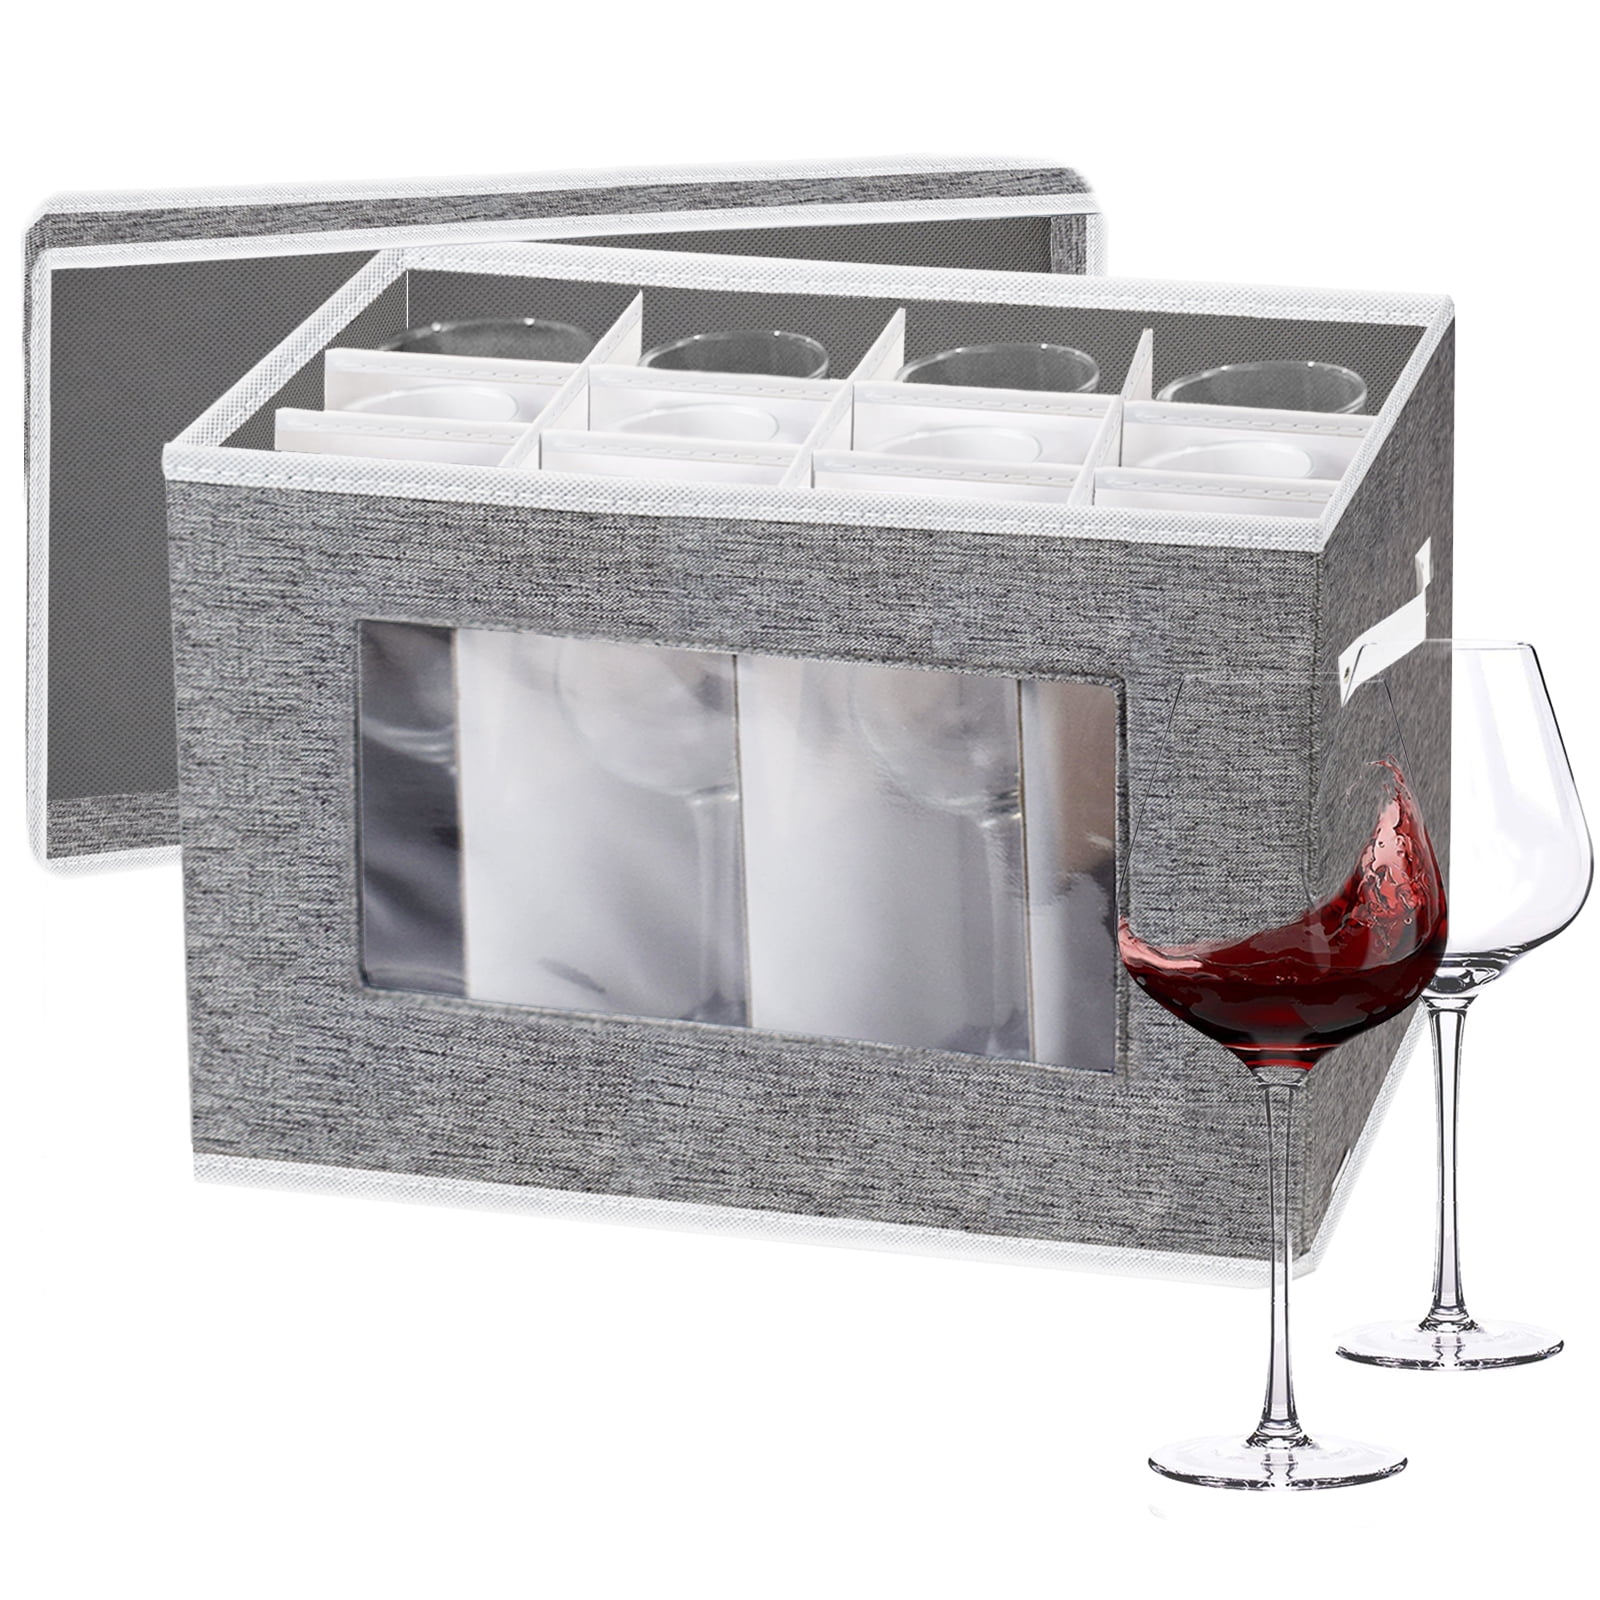 VERONLY Stemware Storage Cases, Wine Glass Storage Box Containers